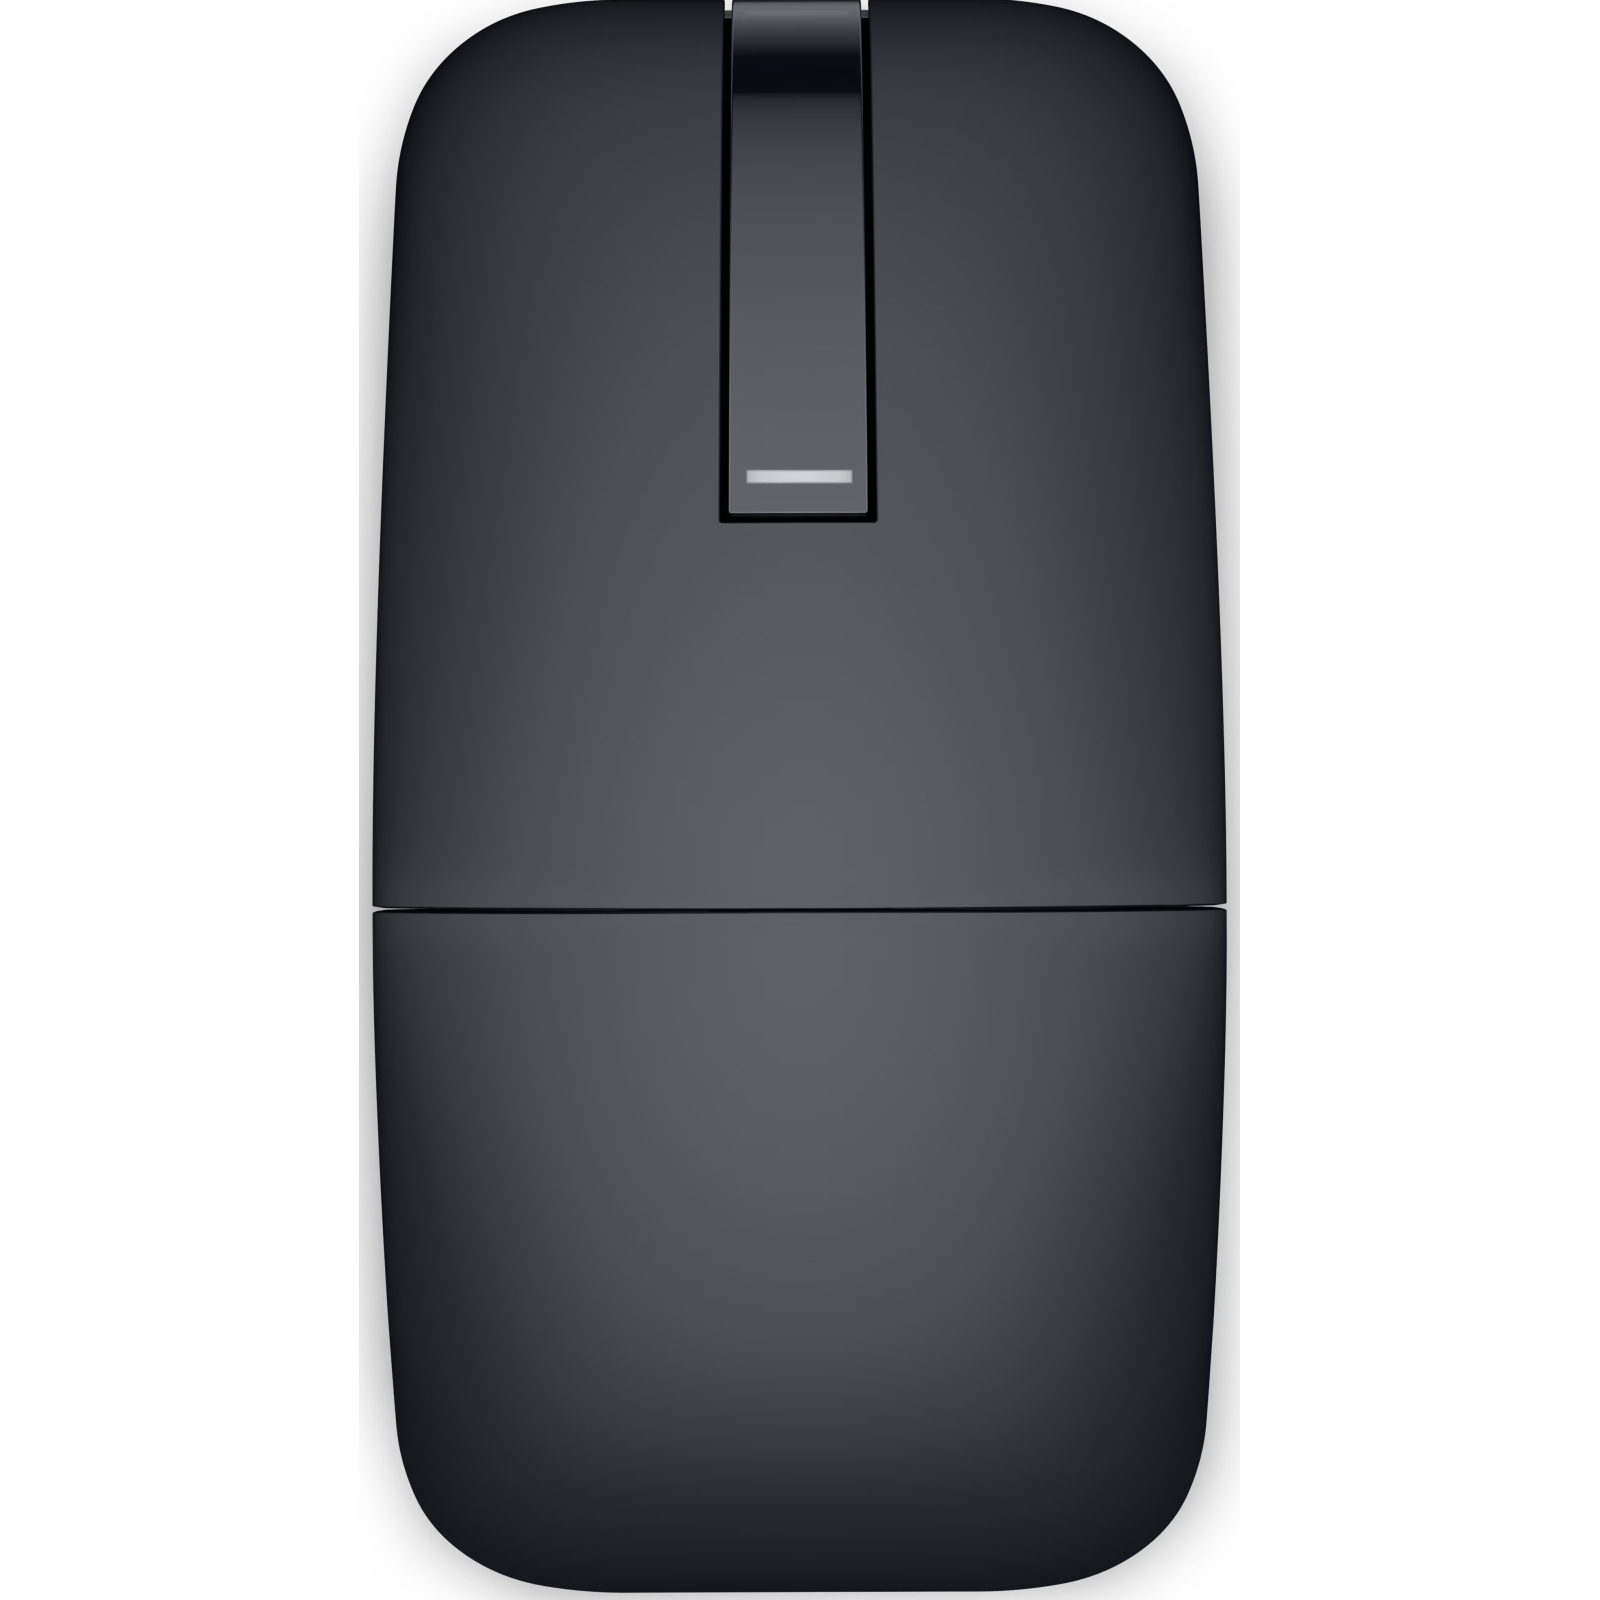 Мышка Dell MS700 Bluetooth Travel Black (570-ABQN)